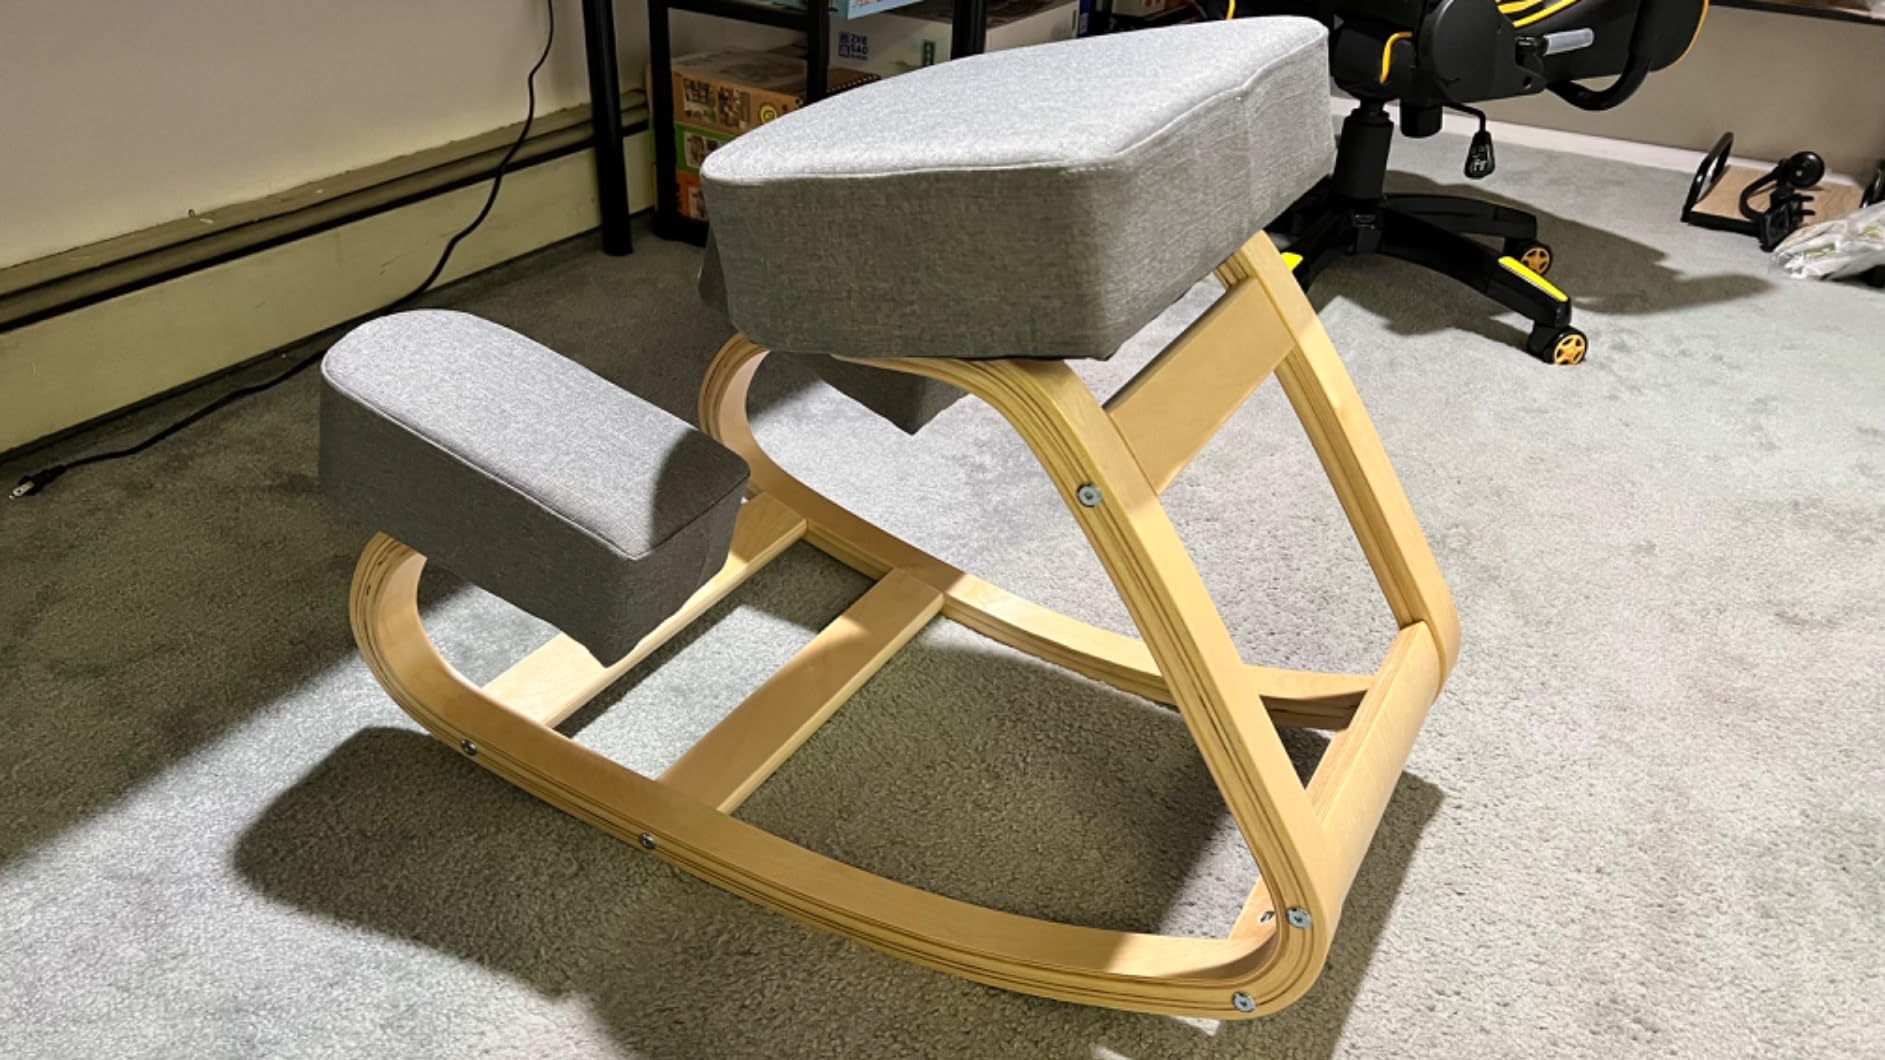 Costway Ergonomic Kneeling Chair Rocking Stool Upright Posture Office  Furniture Grey